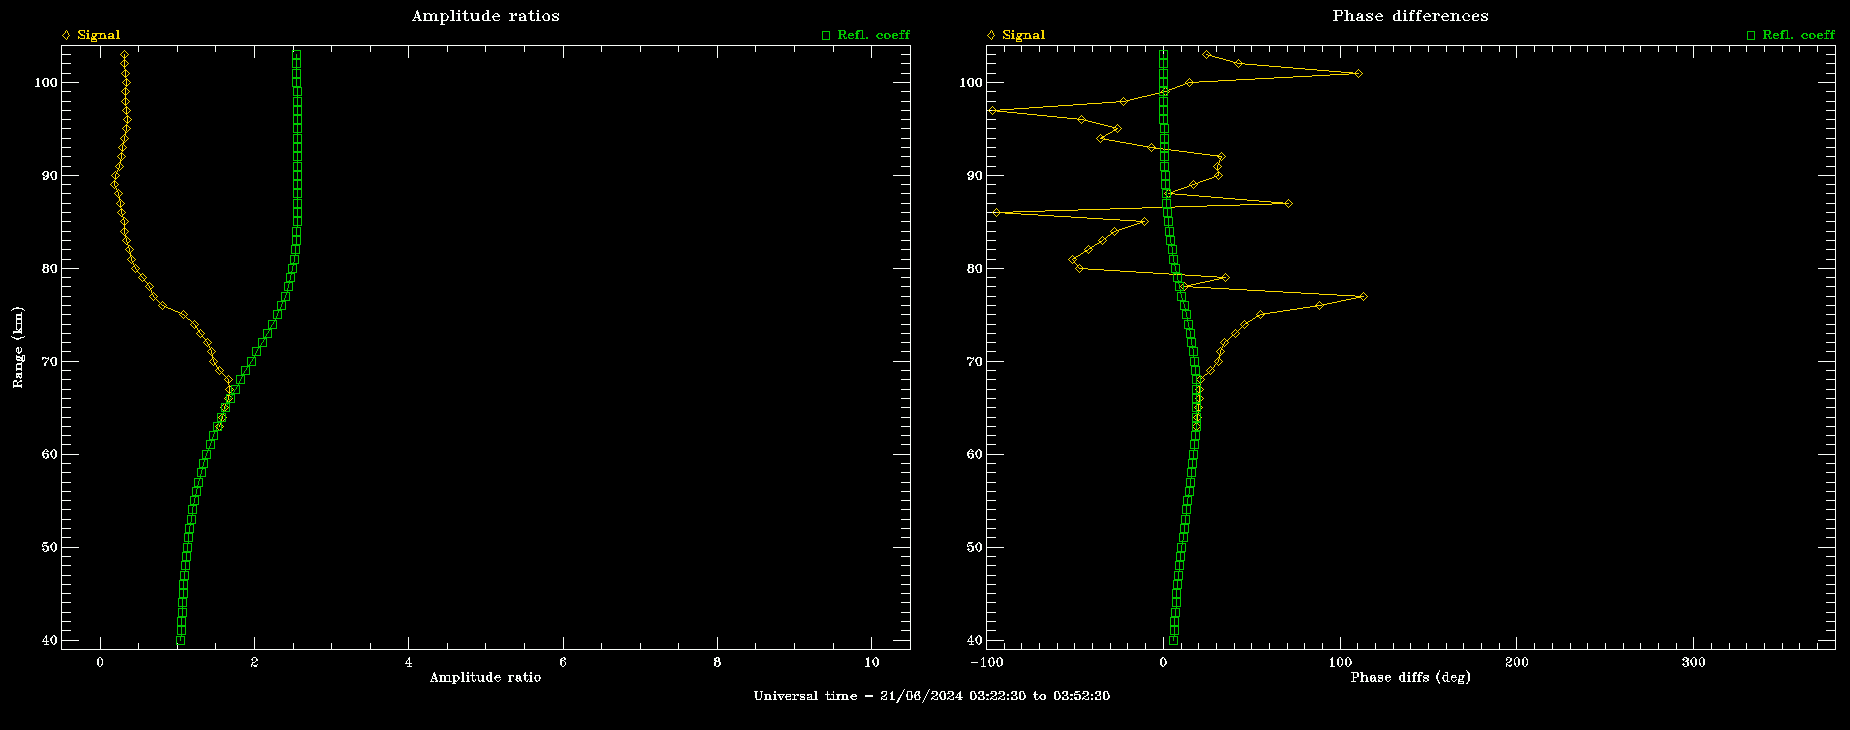 Saura MF radar - DAE Electron Density profiles